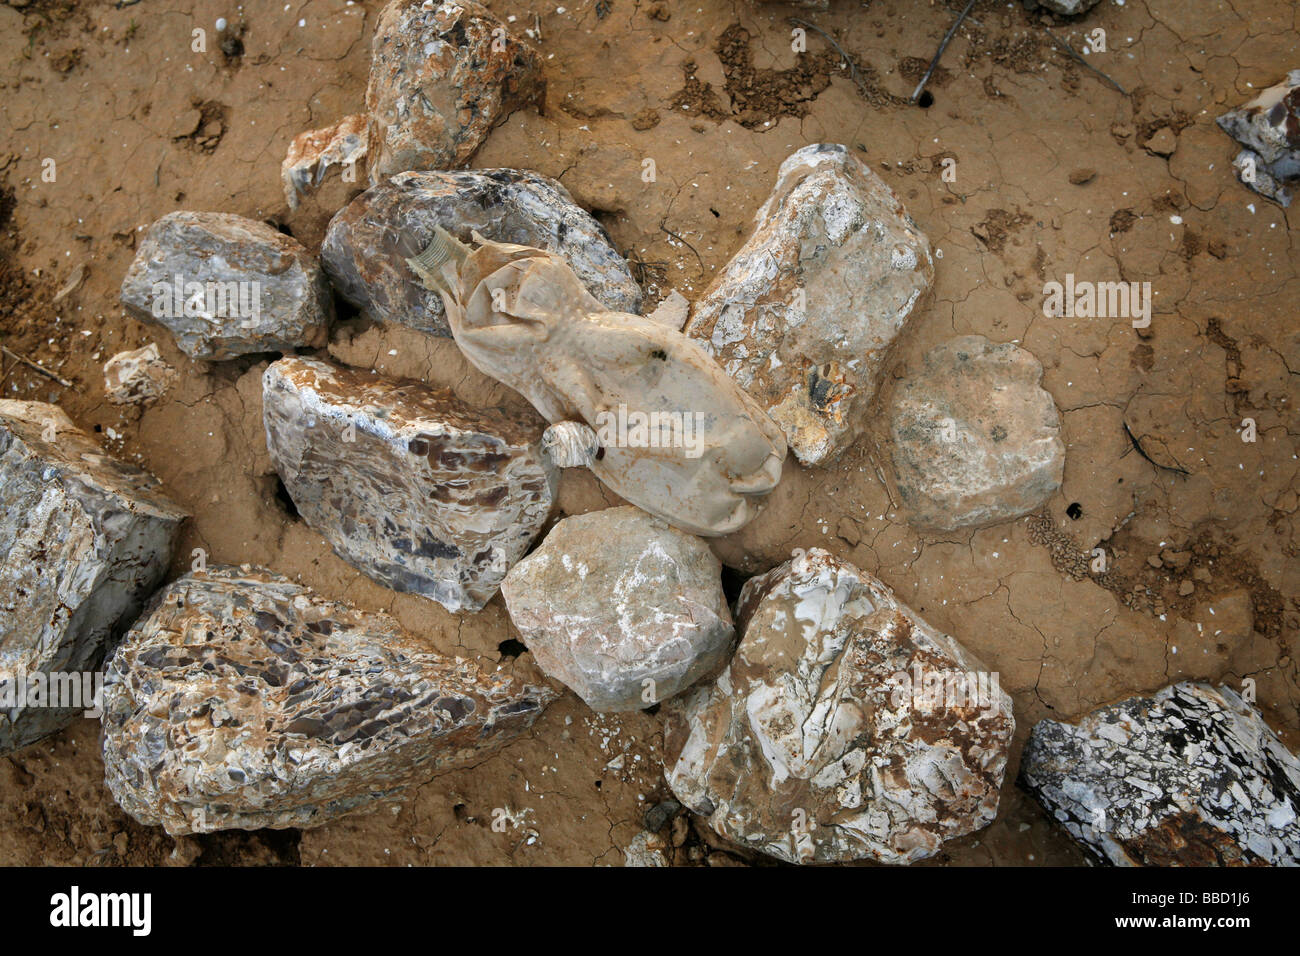 A discarded plastic bottle used to smoke drugs. Wadi ' Nam, Hura, Israel. Stock Photo